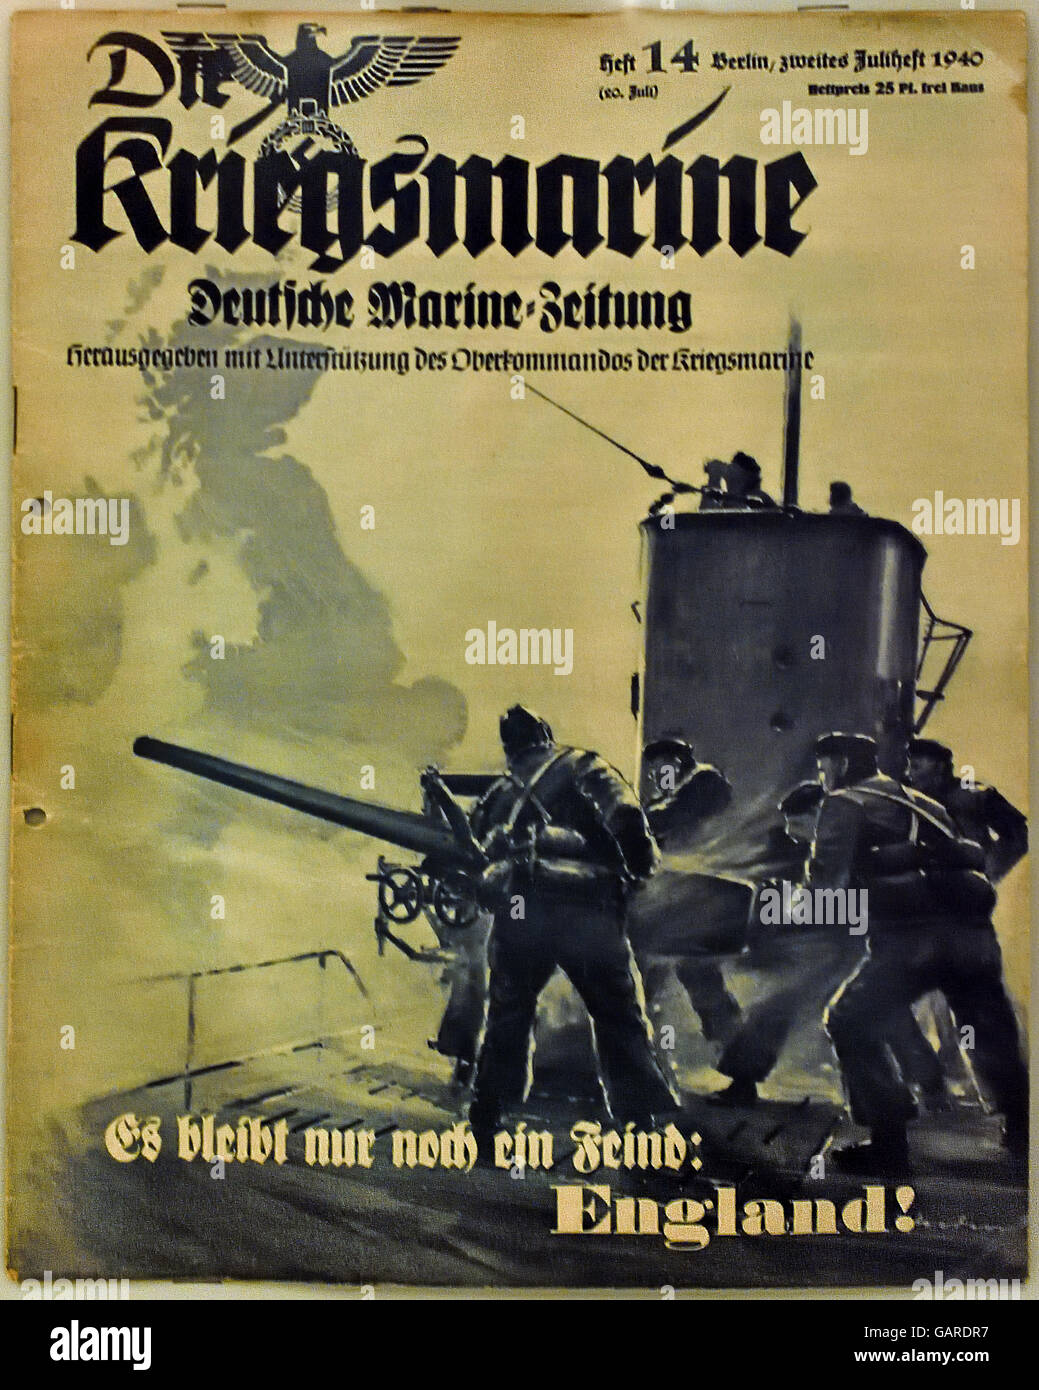 Kriegsmarine mit Beitragen zum seekrieg gegen Grossbritannien - Navy con contribuendo alla guerra navale contro la Gran Bretagna 20 juli 1940 Berlino Germania nazista Foto Stock